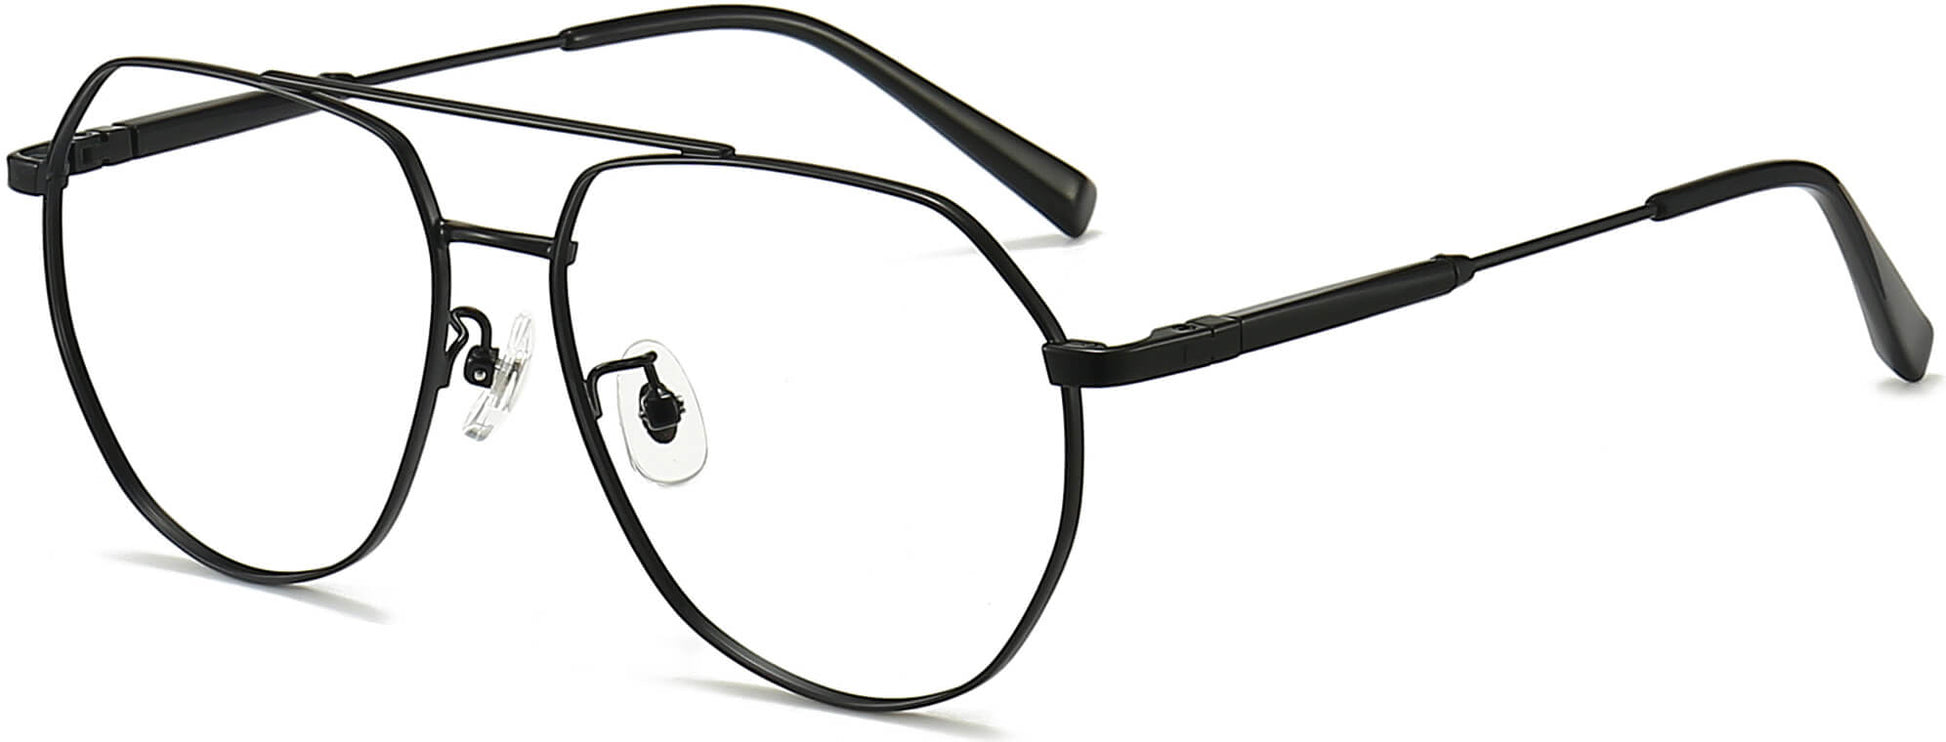 Baker Aviator Black Eyeglasses from ANRRI, angle view